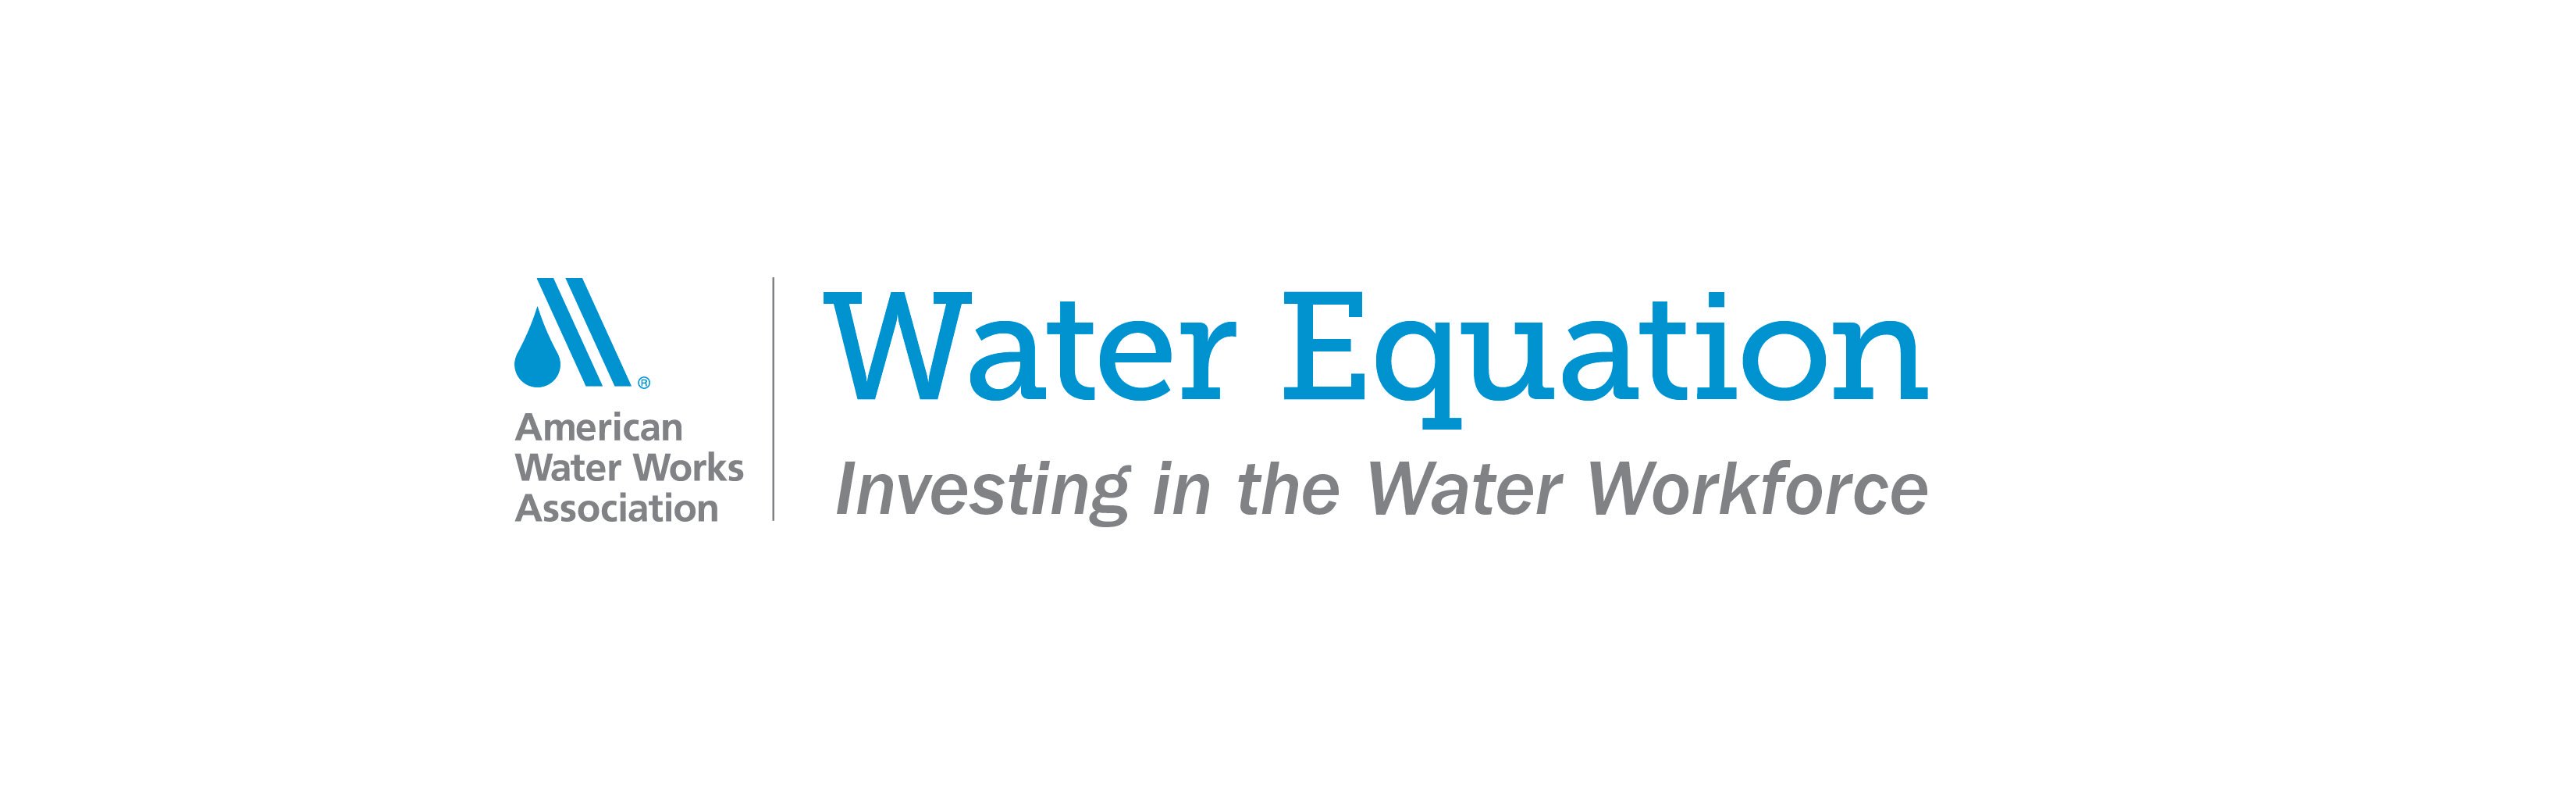 Water Equation 4c_Investing in the Water Workforce Tagline-01.jpg